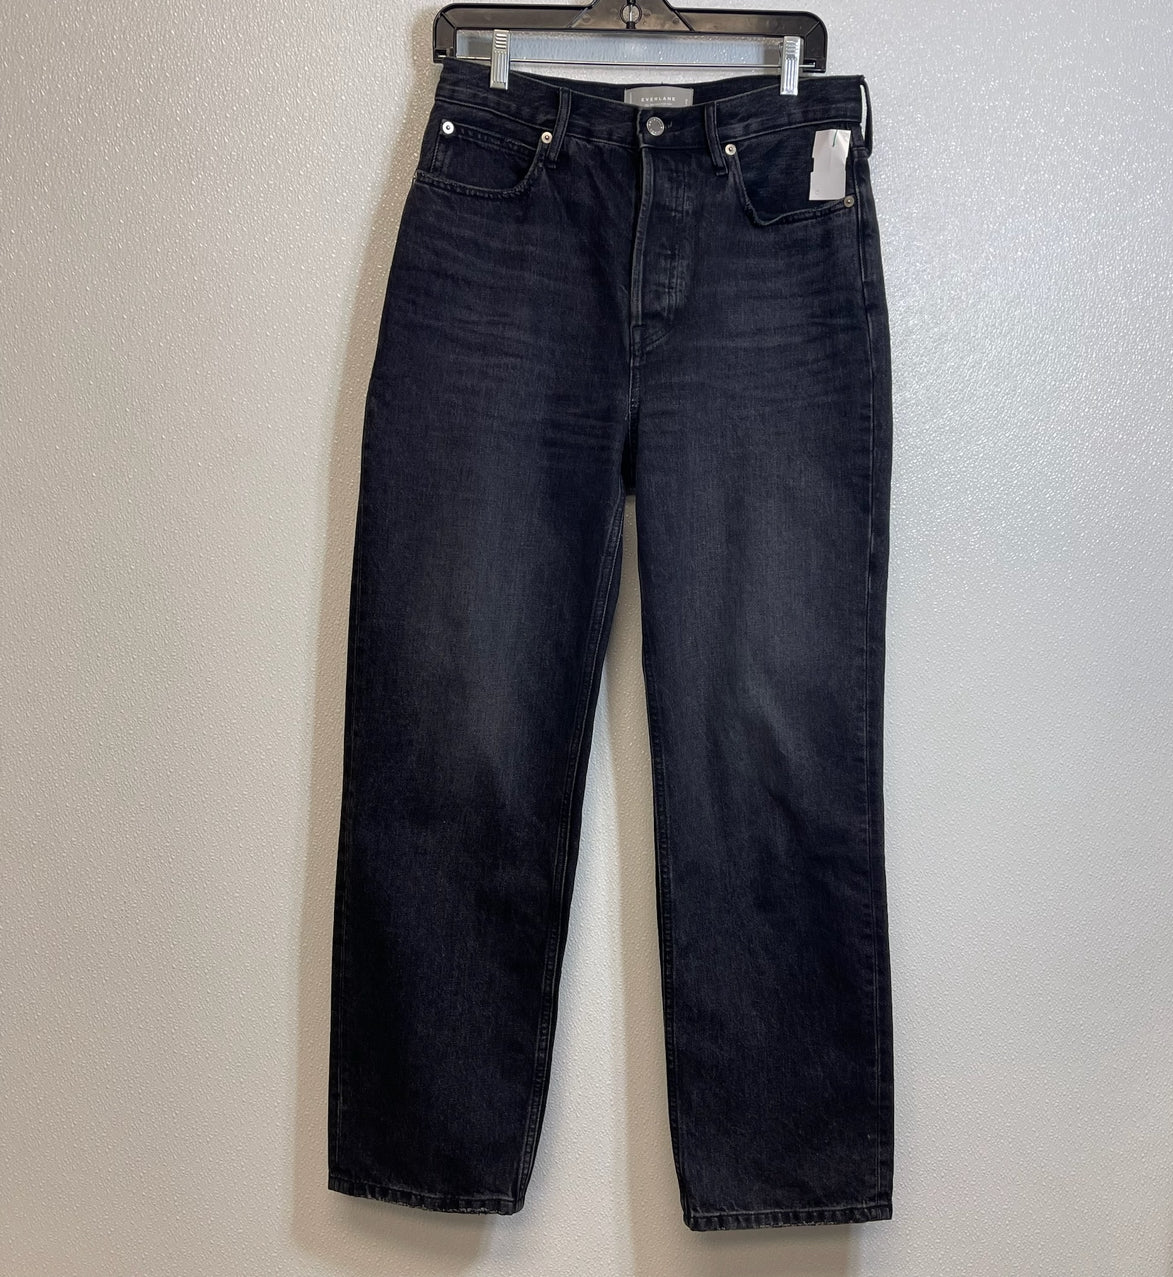 Black Jeans Straight Everlane, Size 6